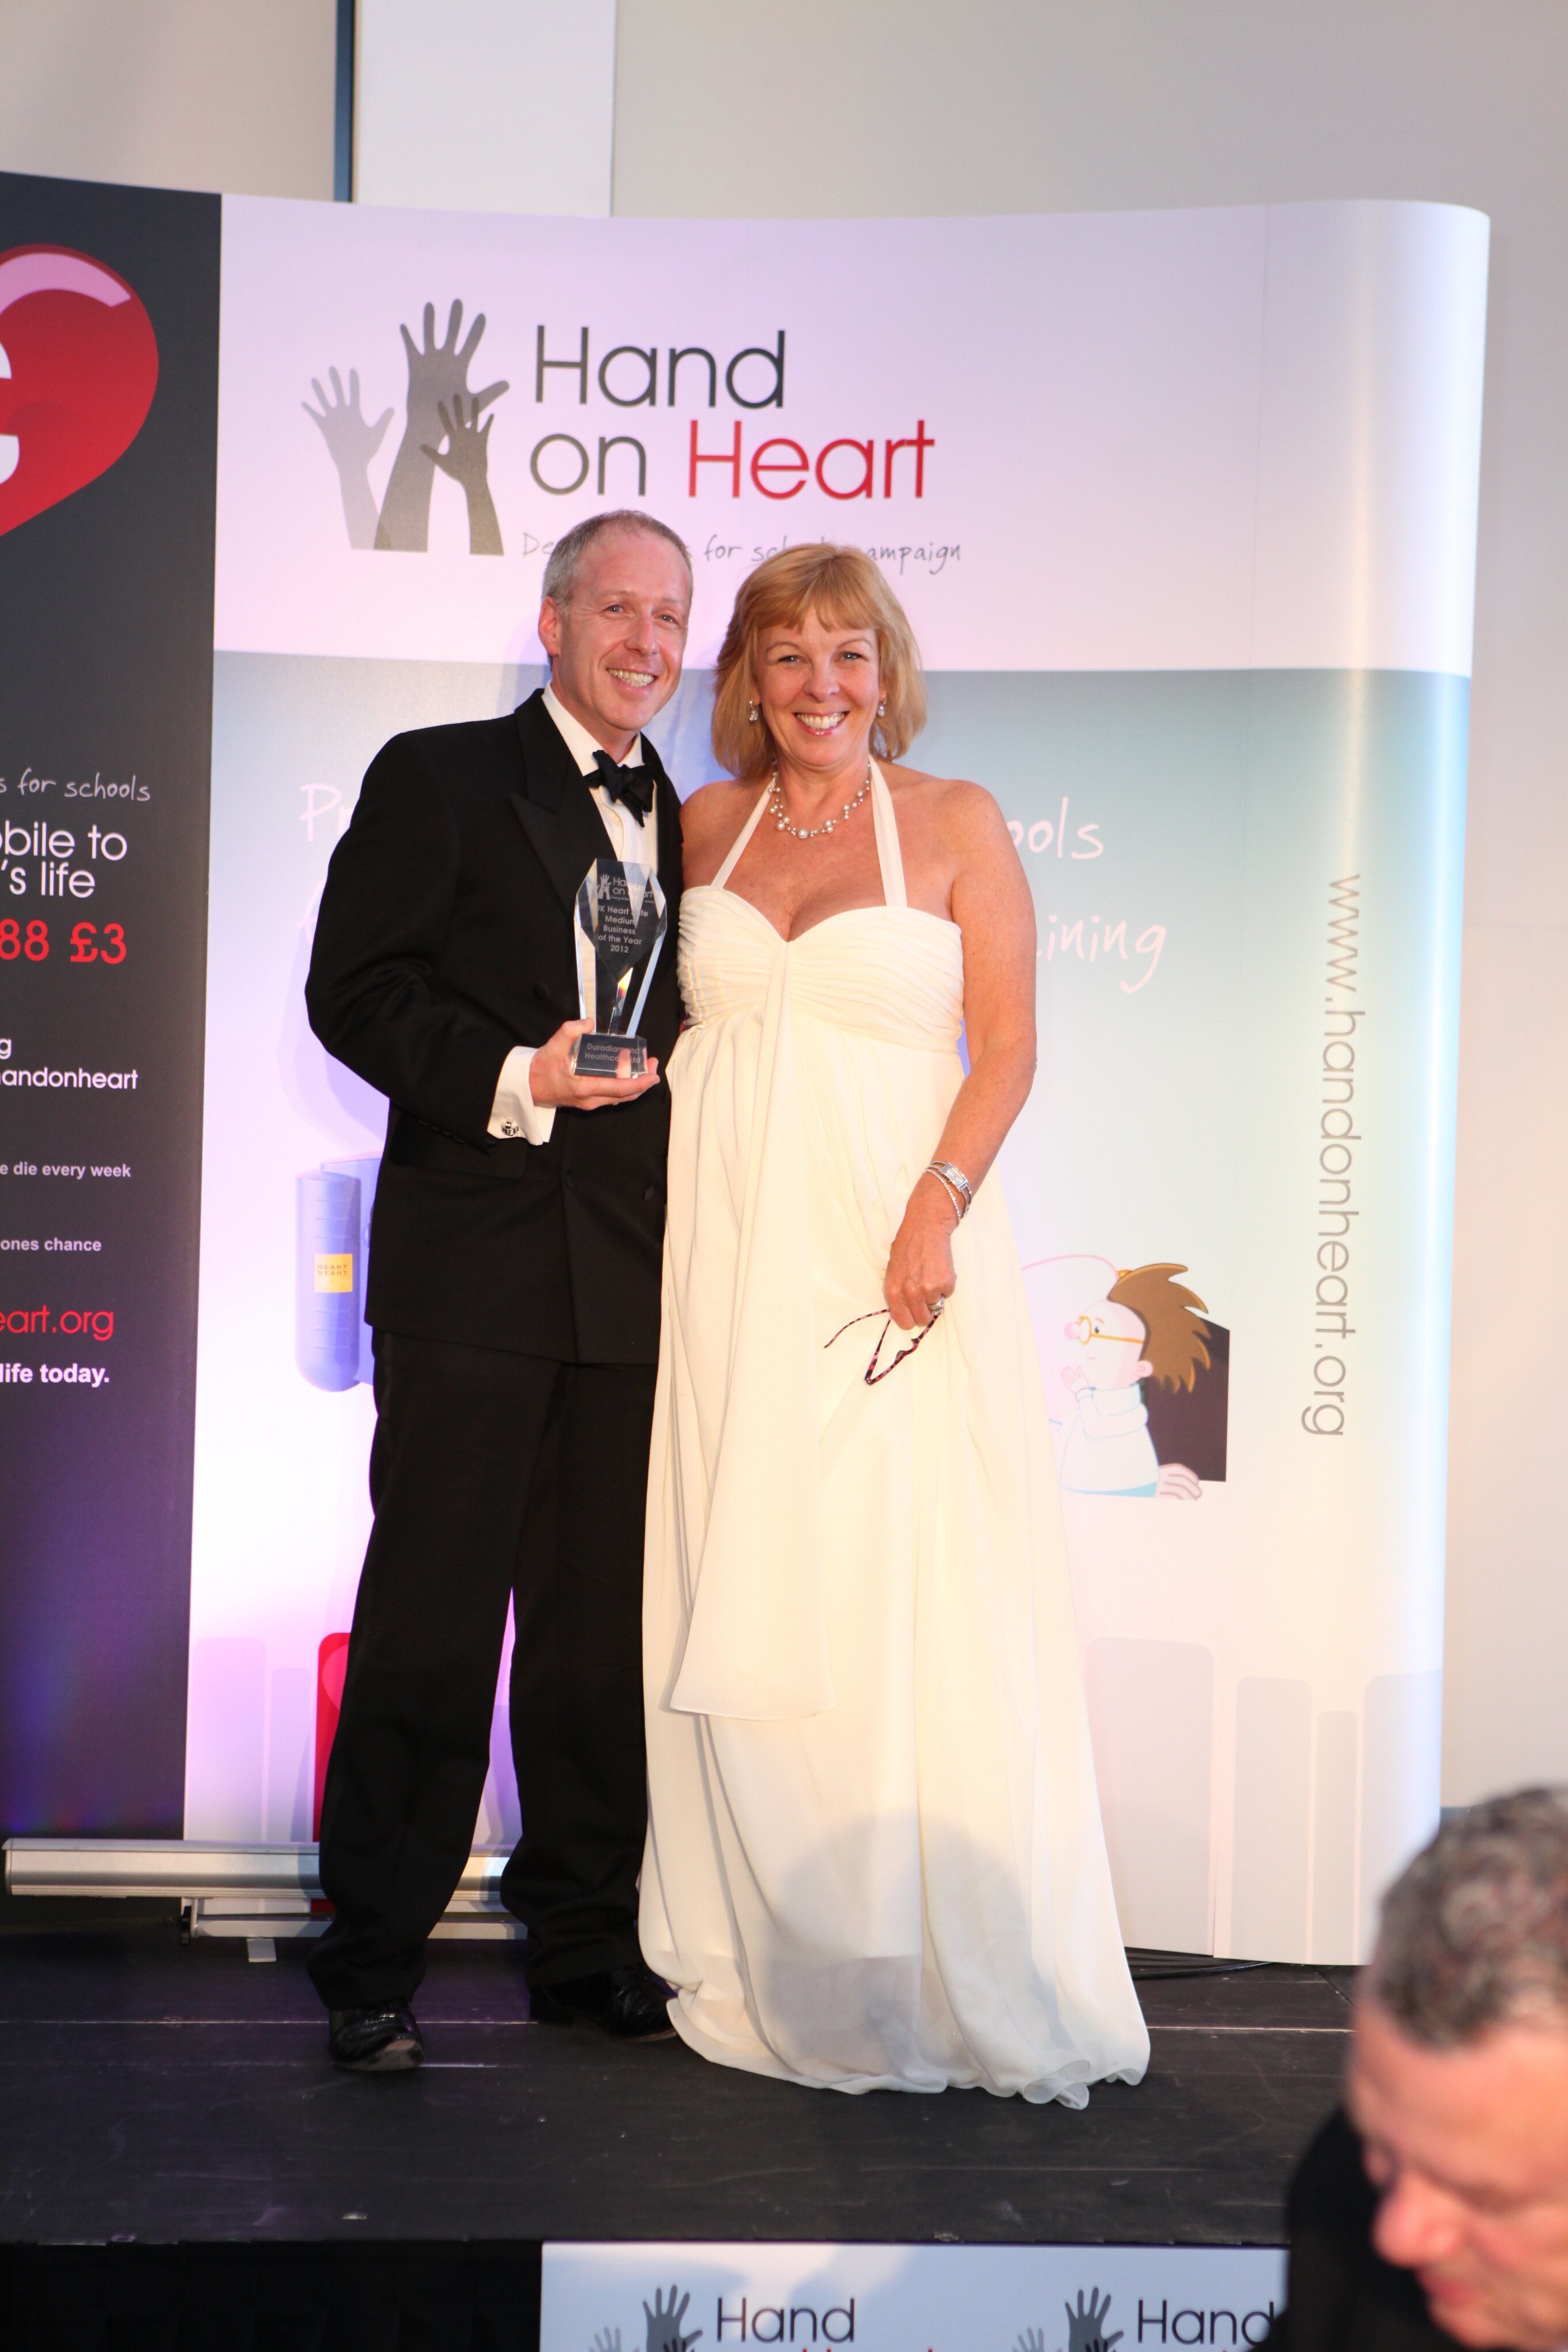 paul mulligan and jo haigh who presented the award